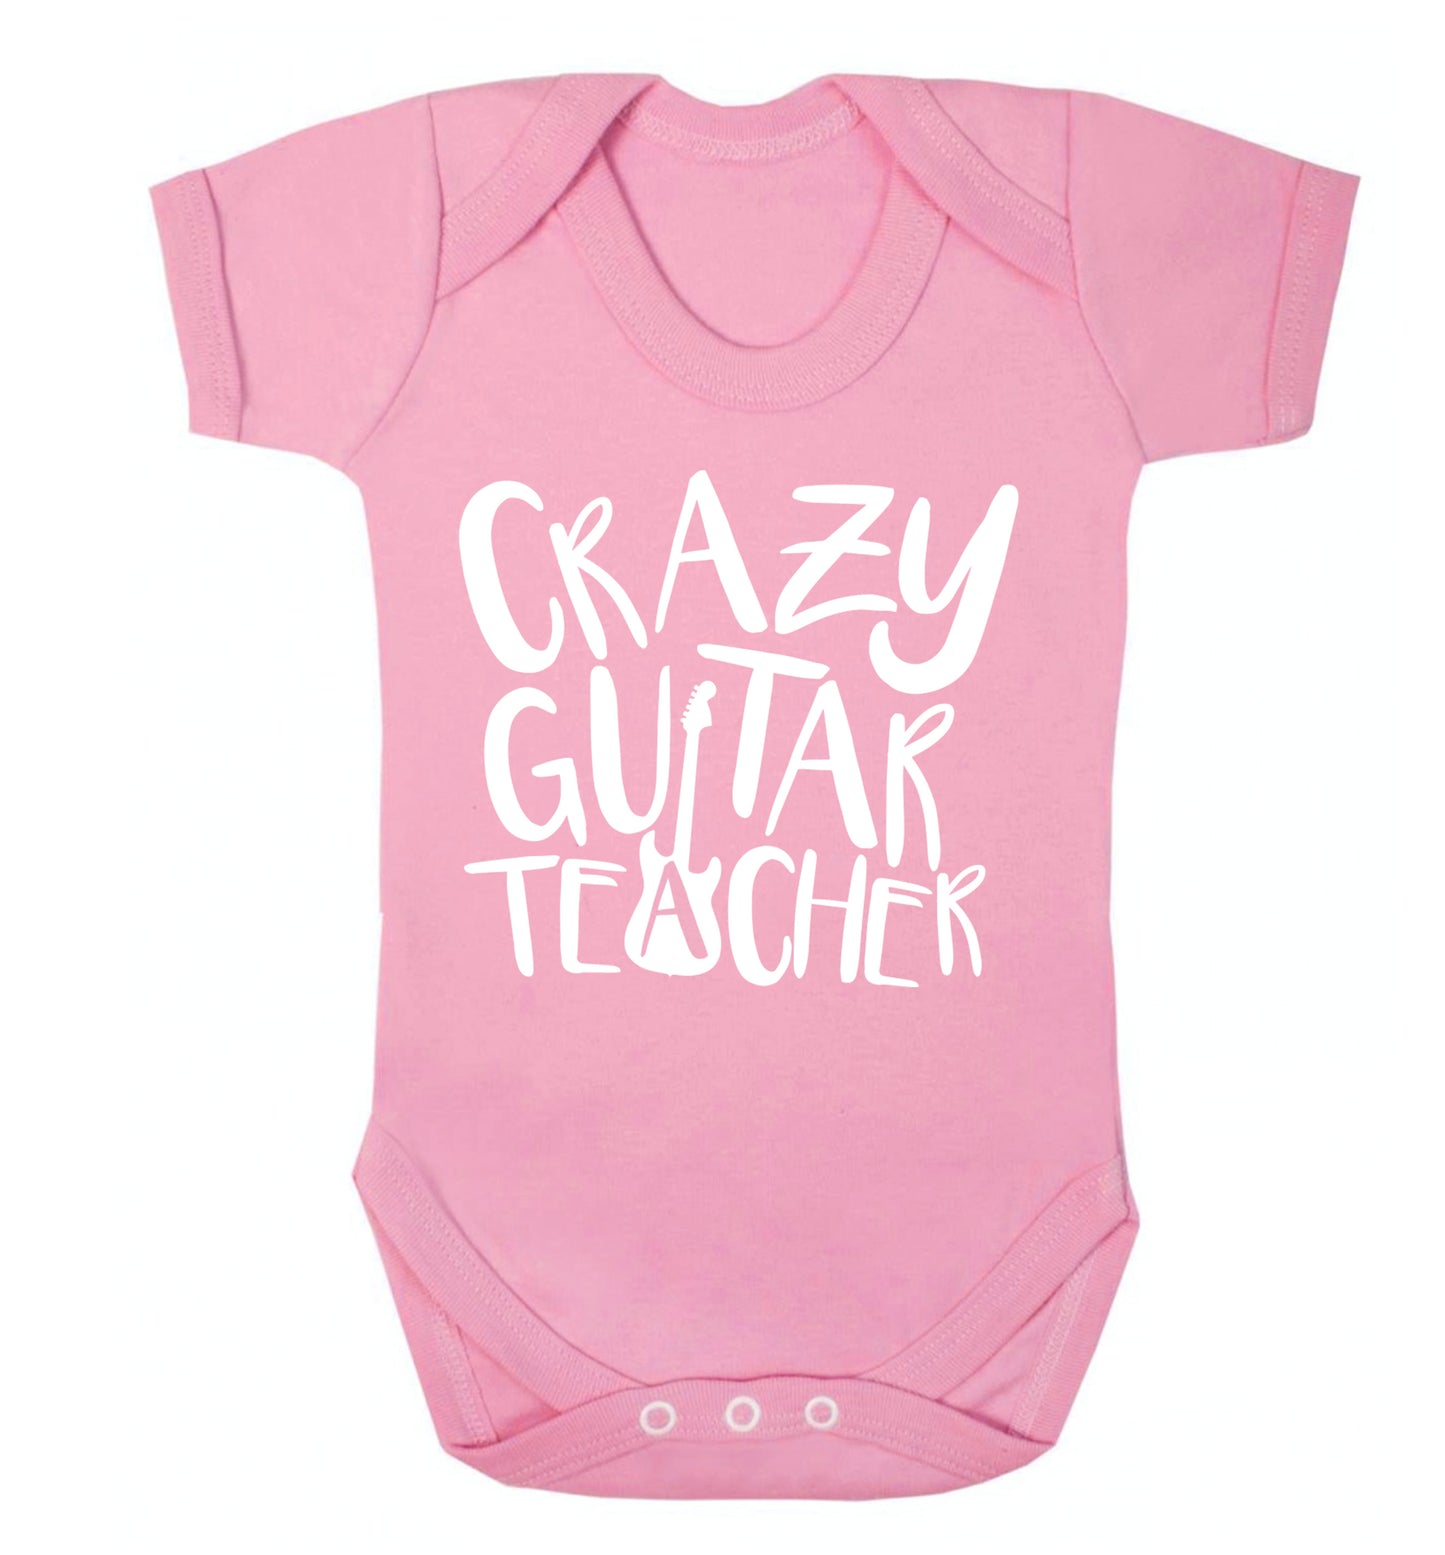 Crazy guitar teacher Baby Vest pale pink 18-24 months